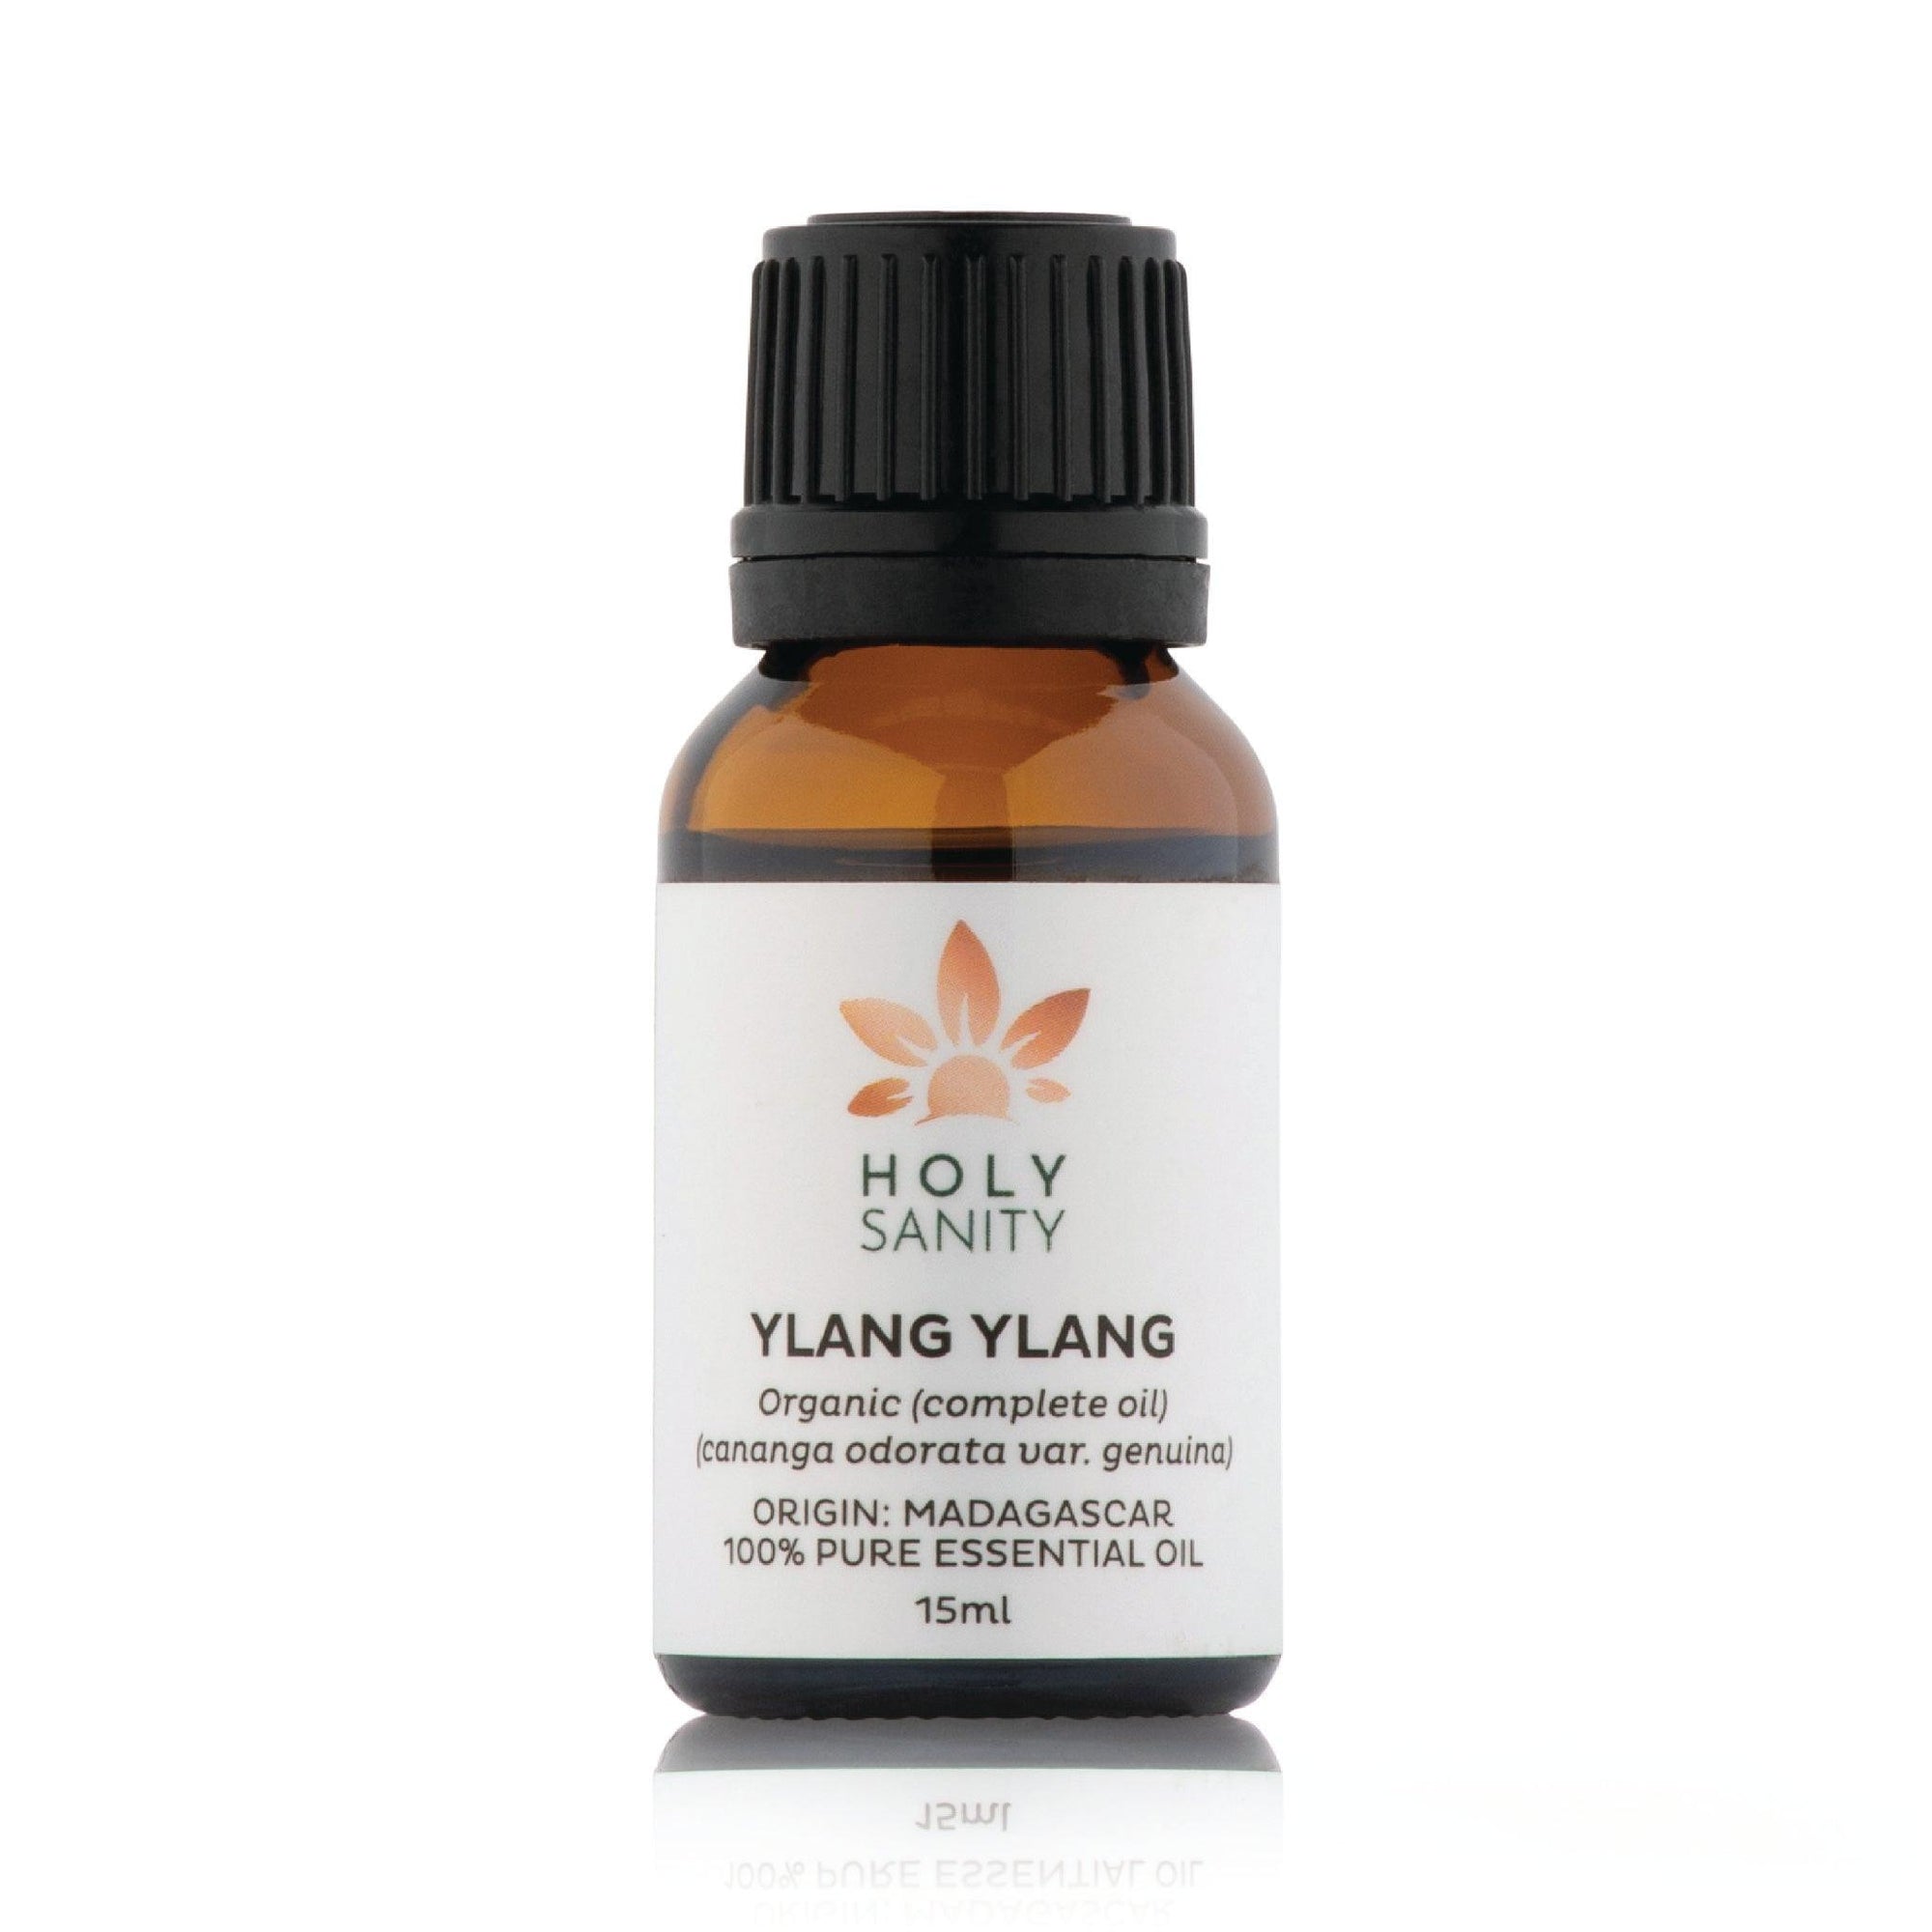 Organic Ylang Ylang Essential Oil (15ml) - Holy Sanity 